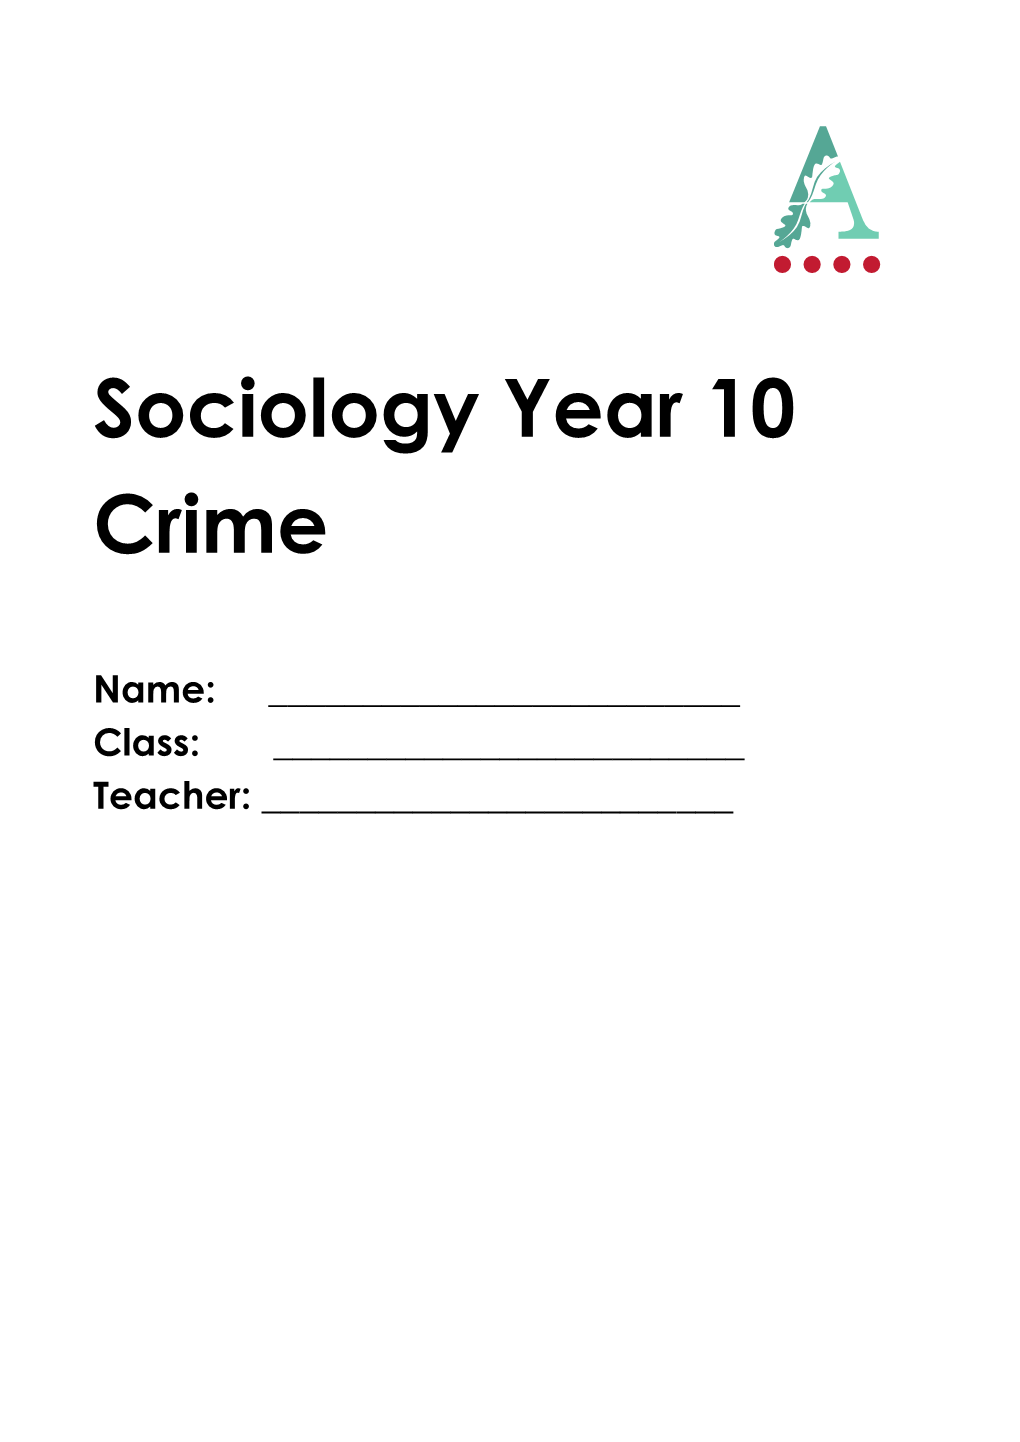 Sociology Year 10 Crime